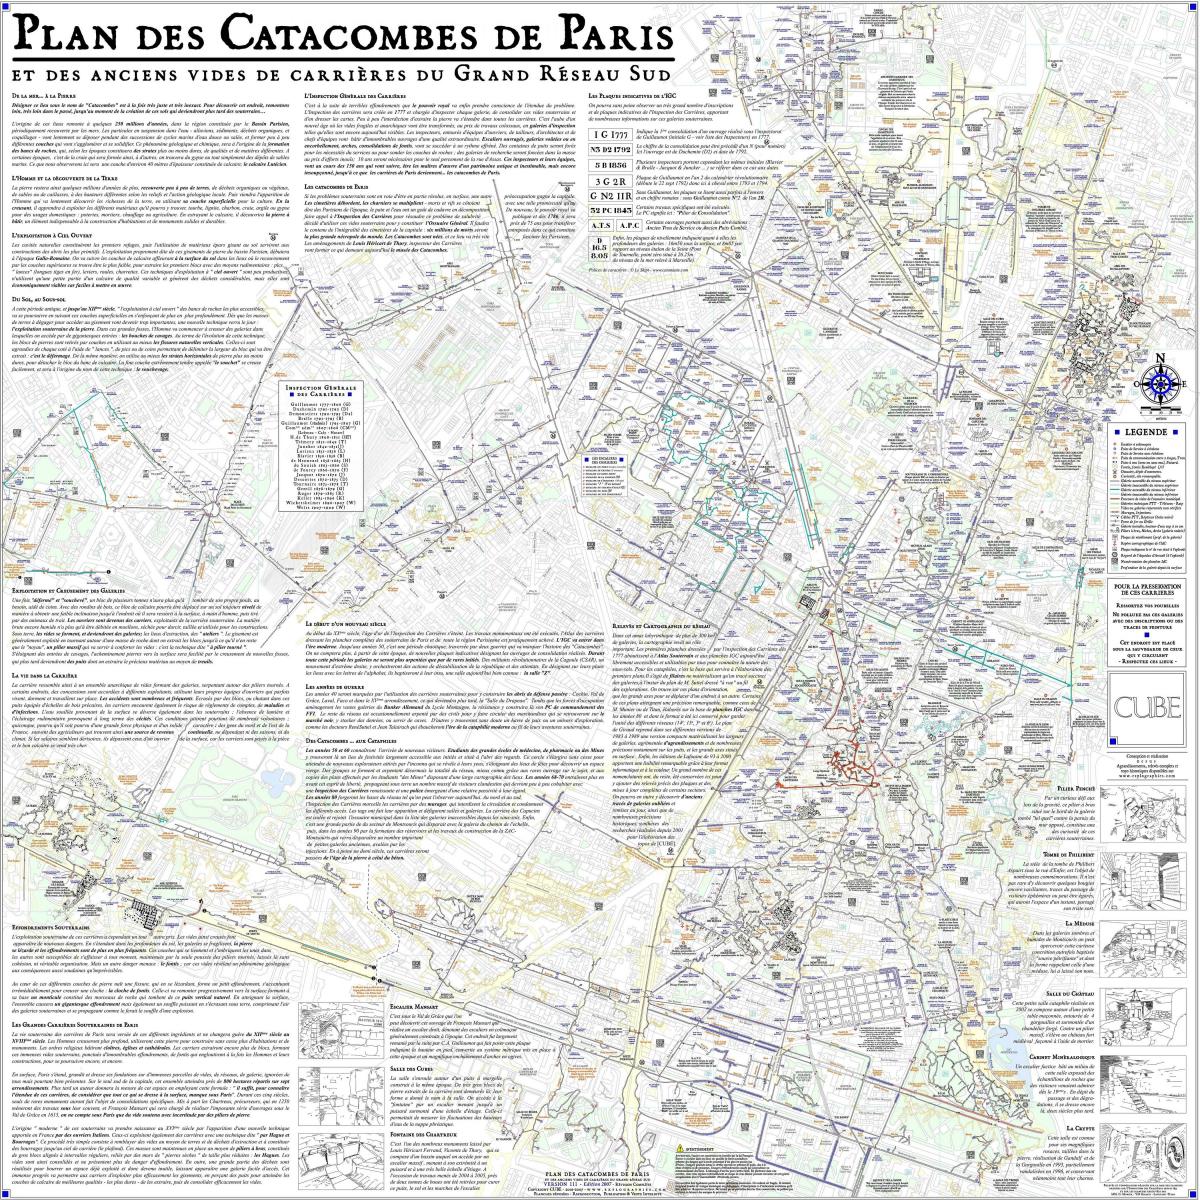 Mapa de las catacumbas de París